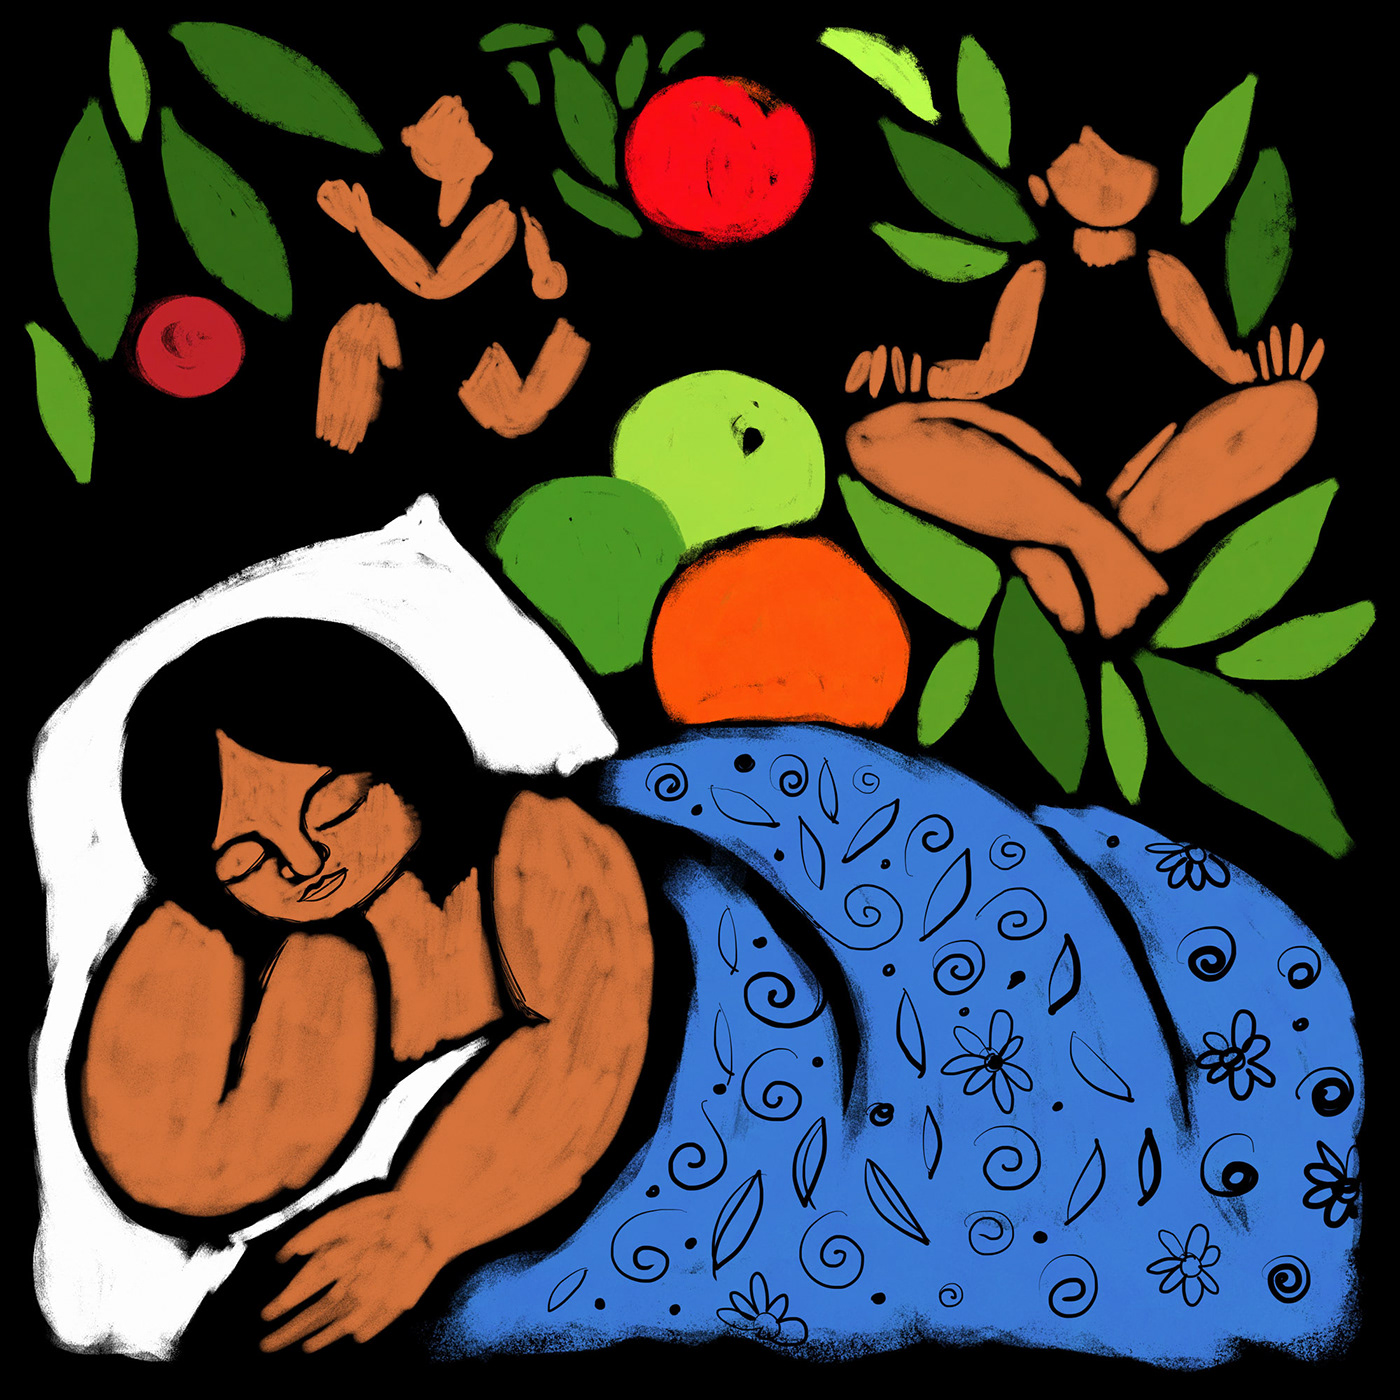 Coronavirus exercise Health healthyhabits inmune system meditation prevention proactive sleep stress